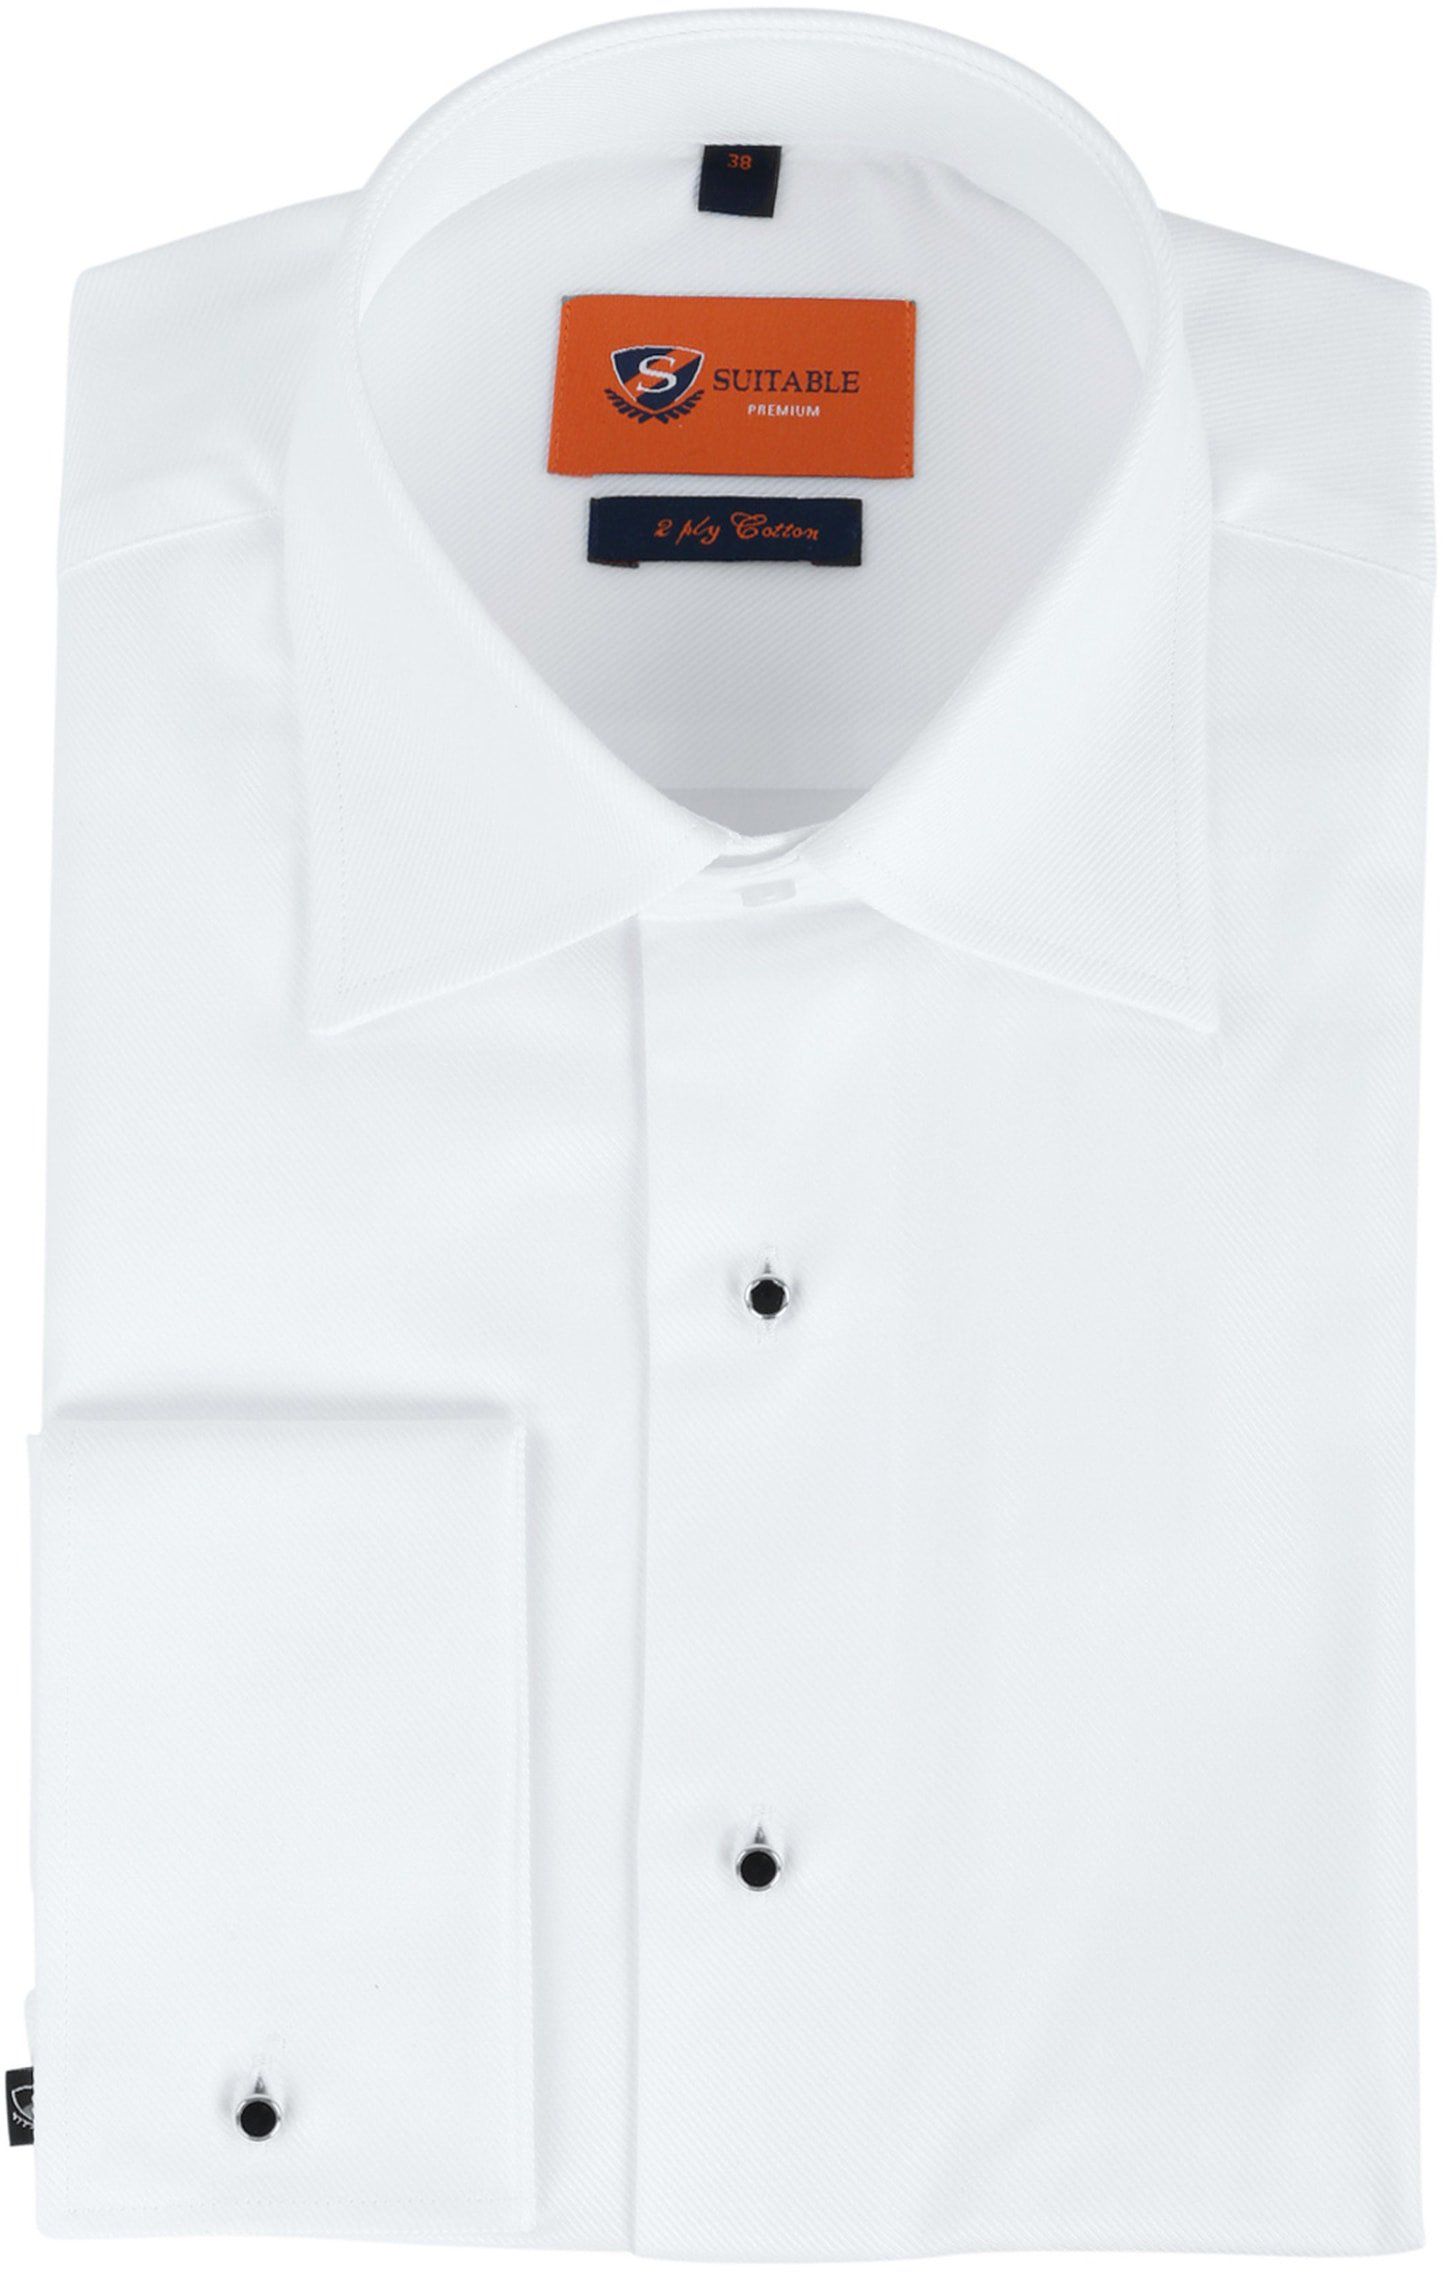 Suitable Tuxedo Shirt Slim-Fit White size 15